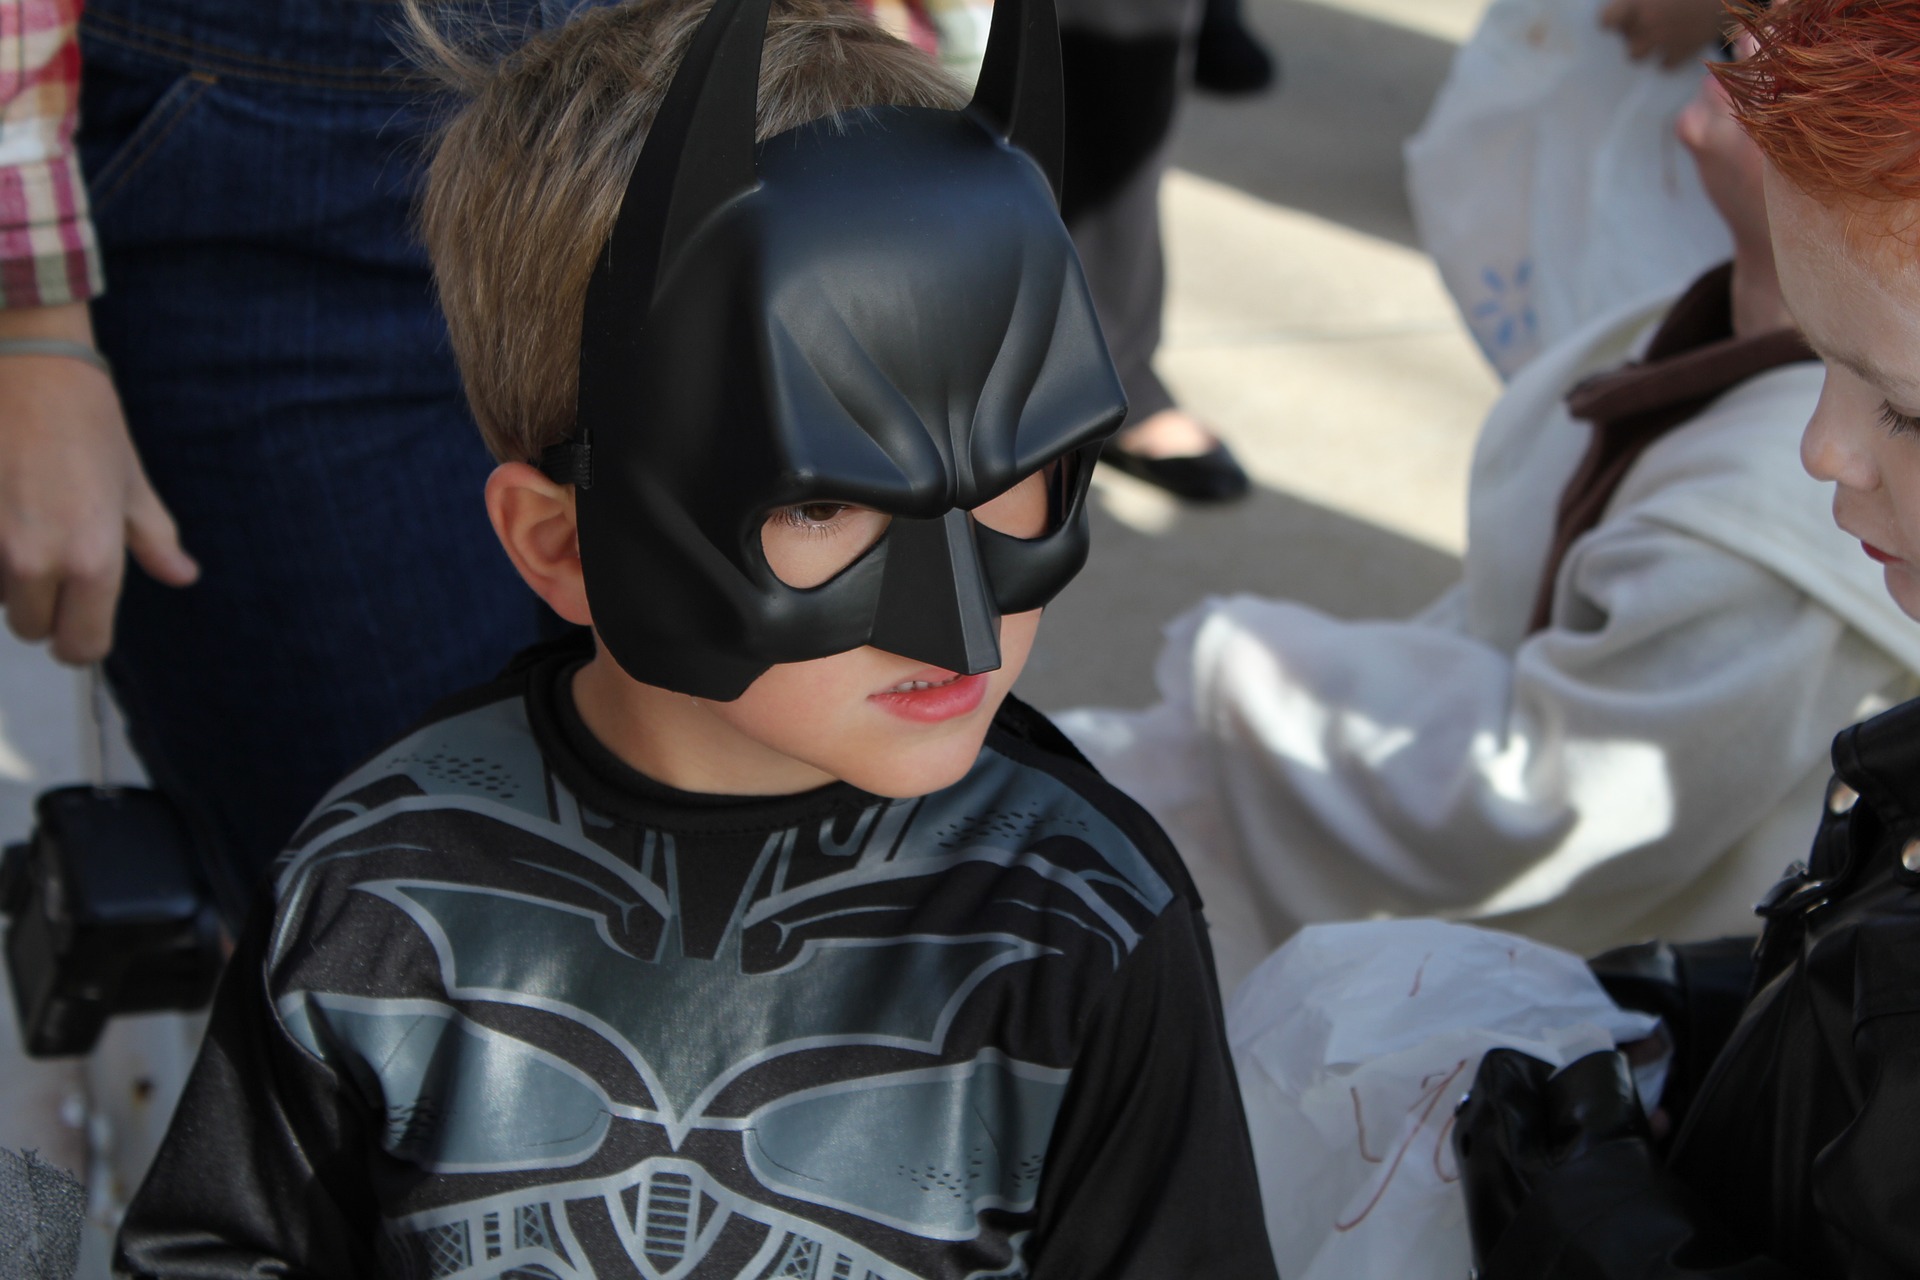 A kid wearing a batman costume on halloween